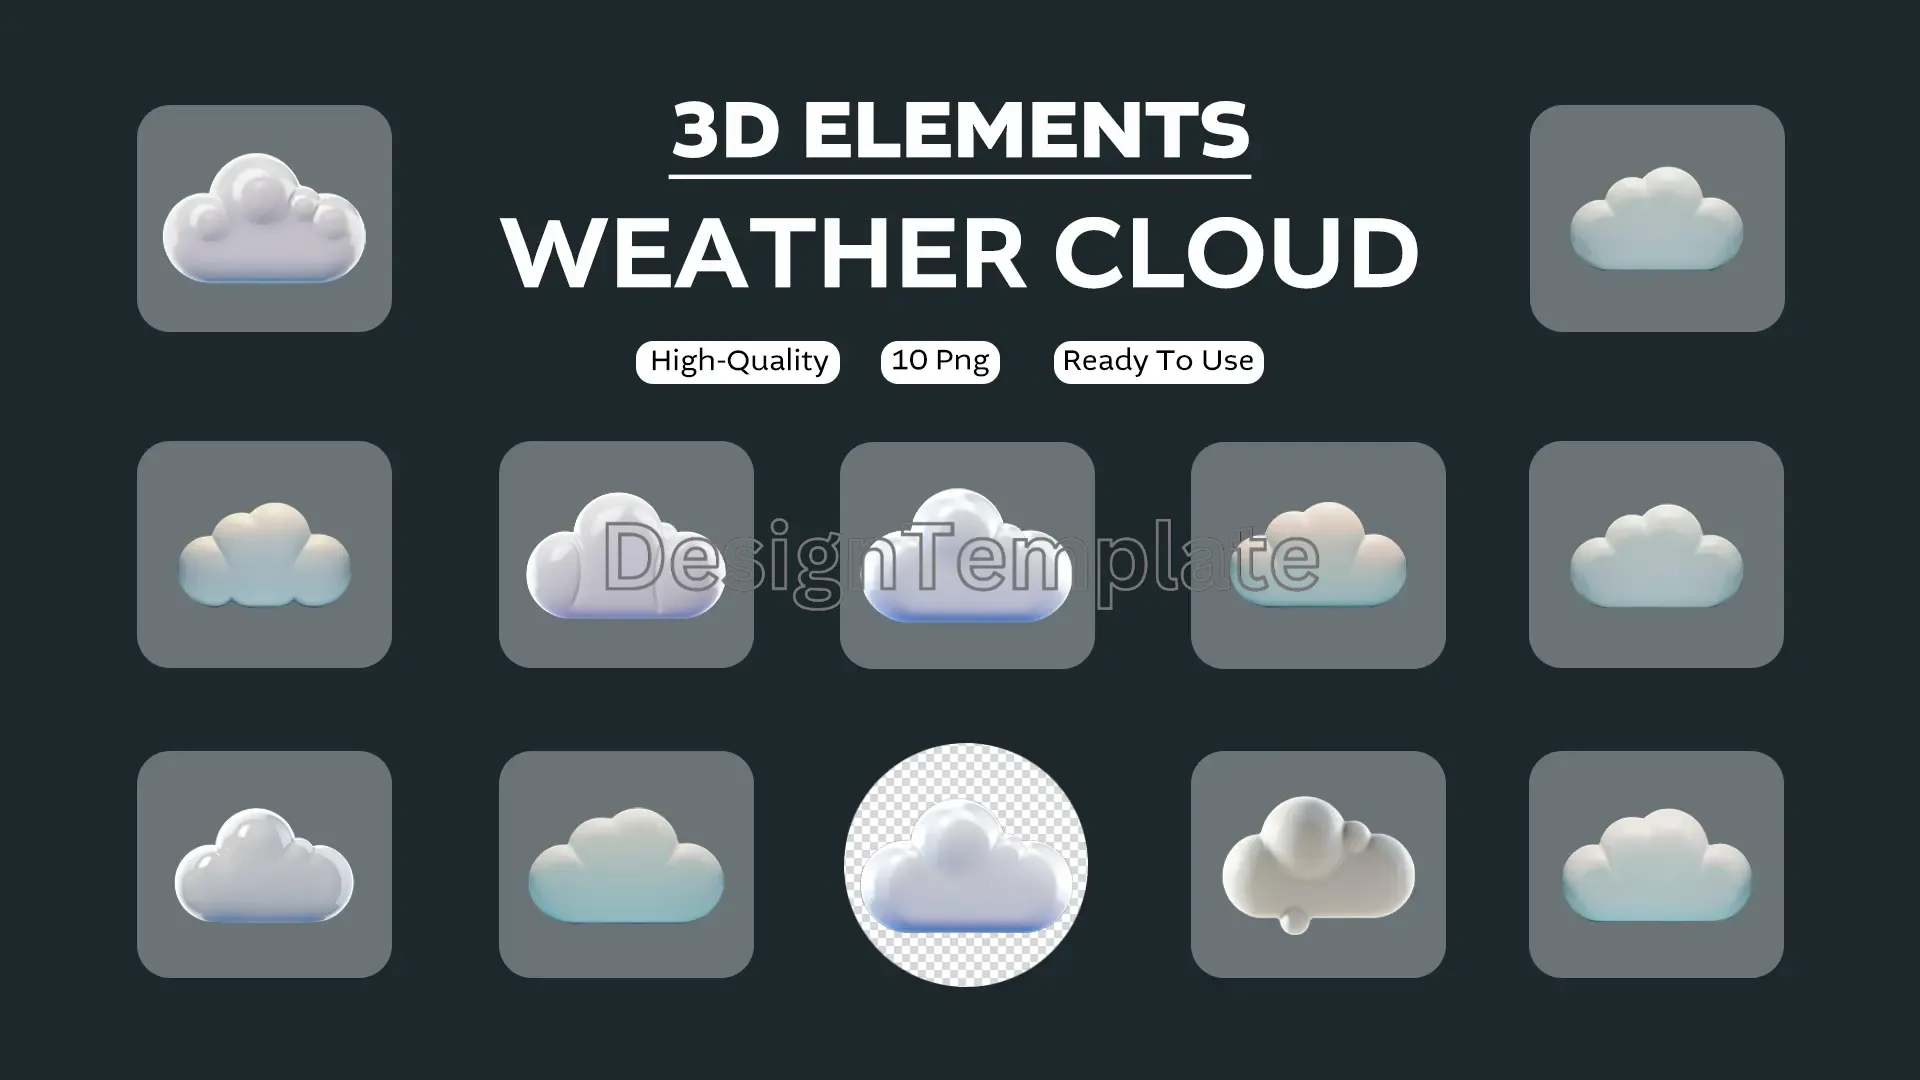 Climates Captured Weather Cloud 3D Elements Collection image